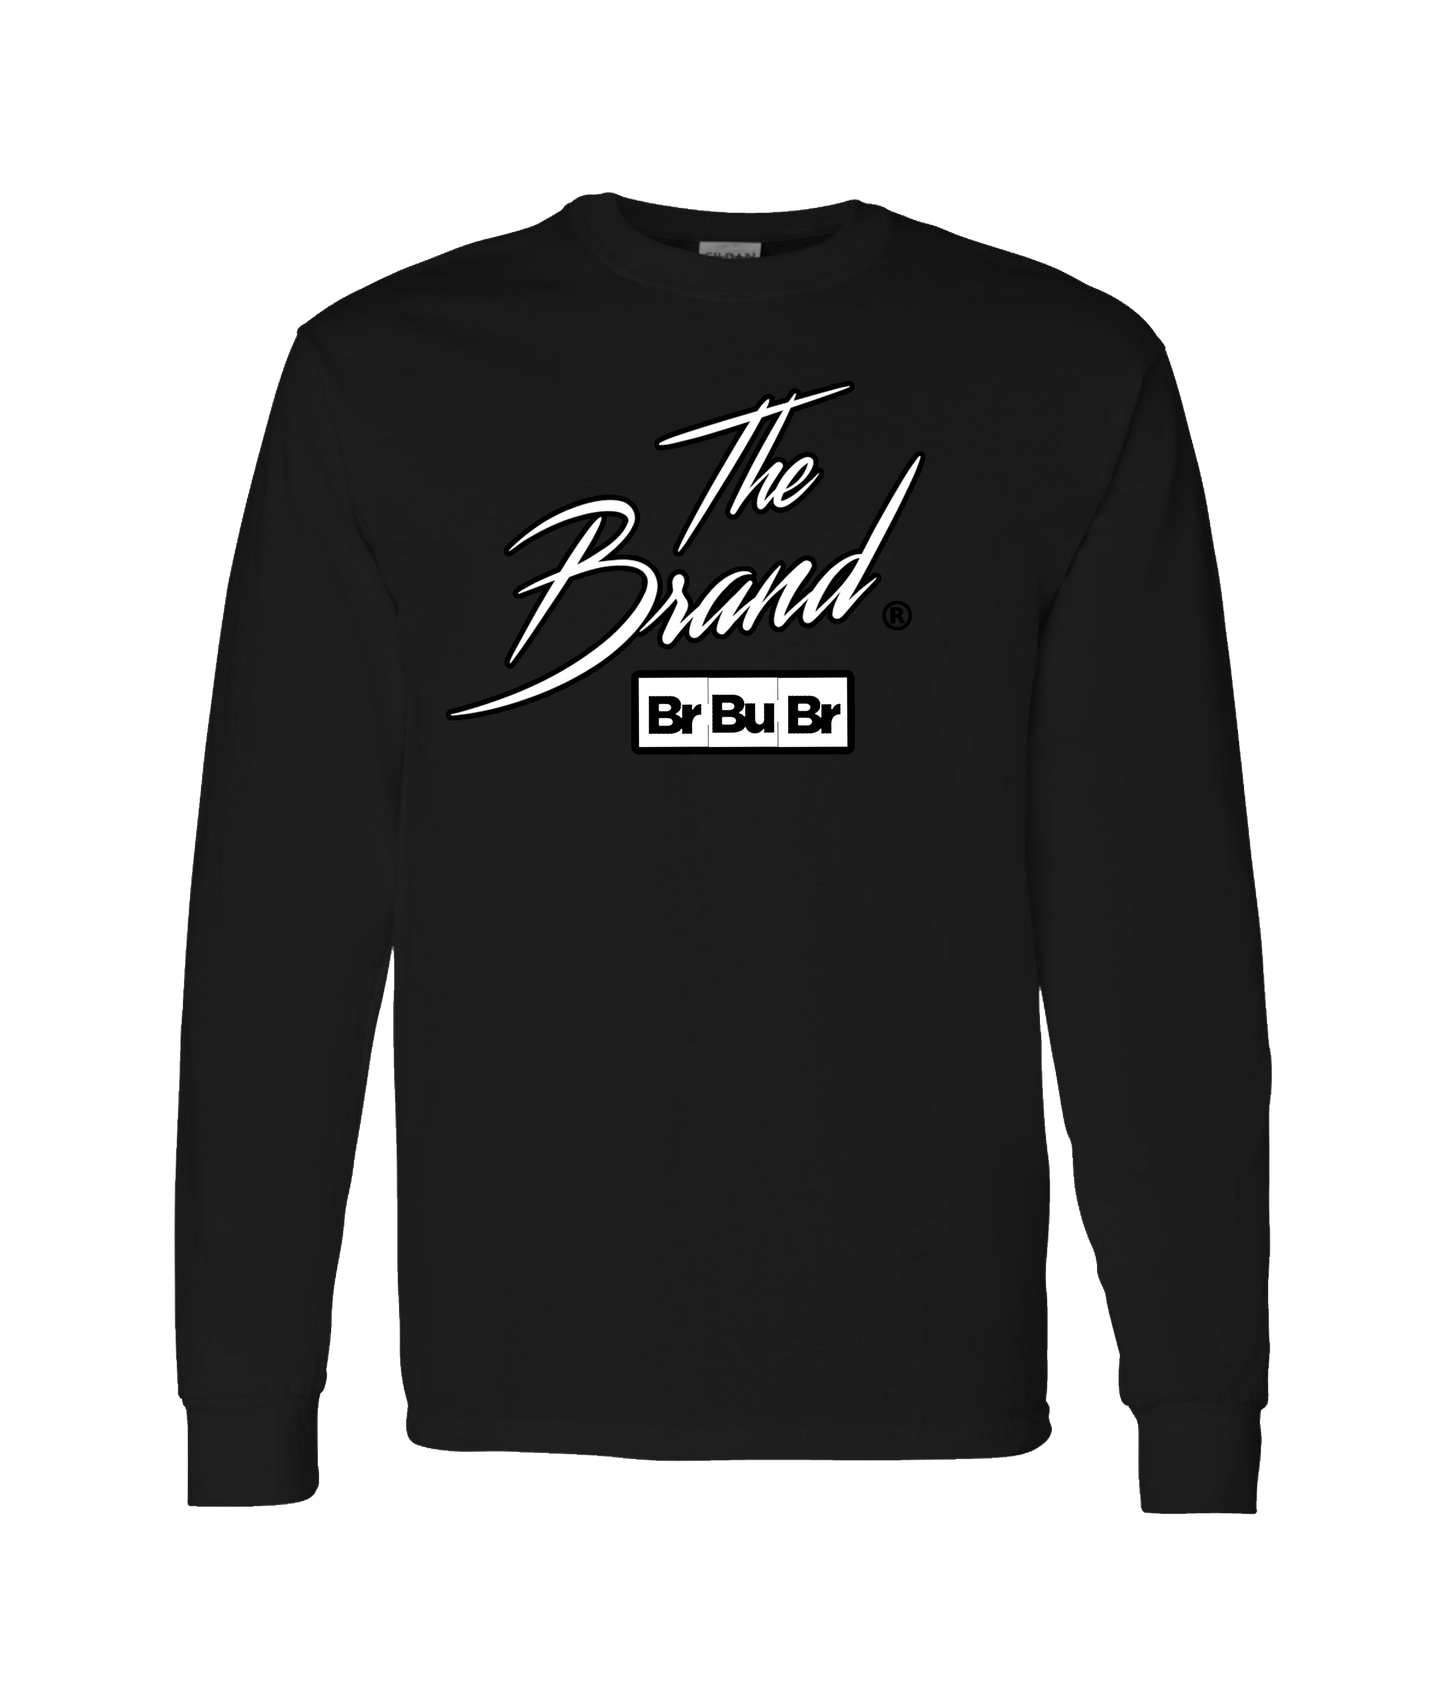 The Breakin Bud Brand - Fall season - Black Long Sleeve T